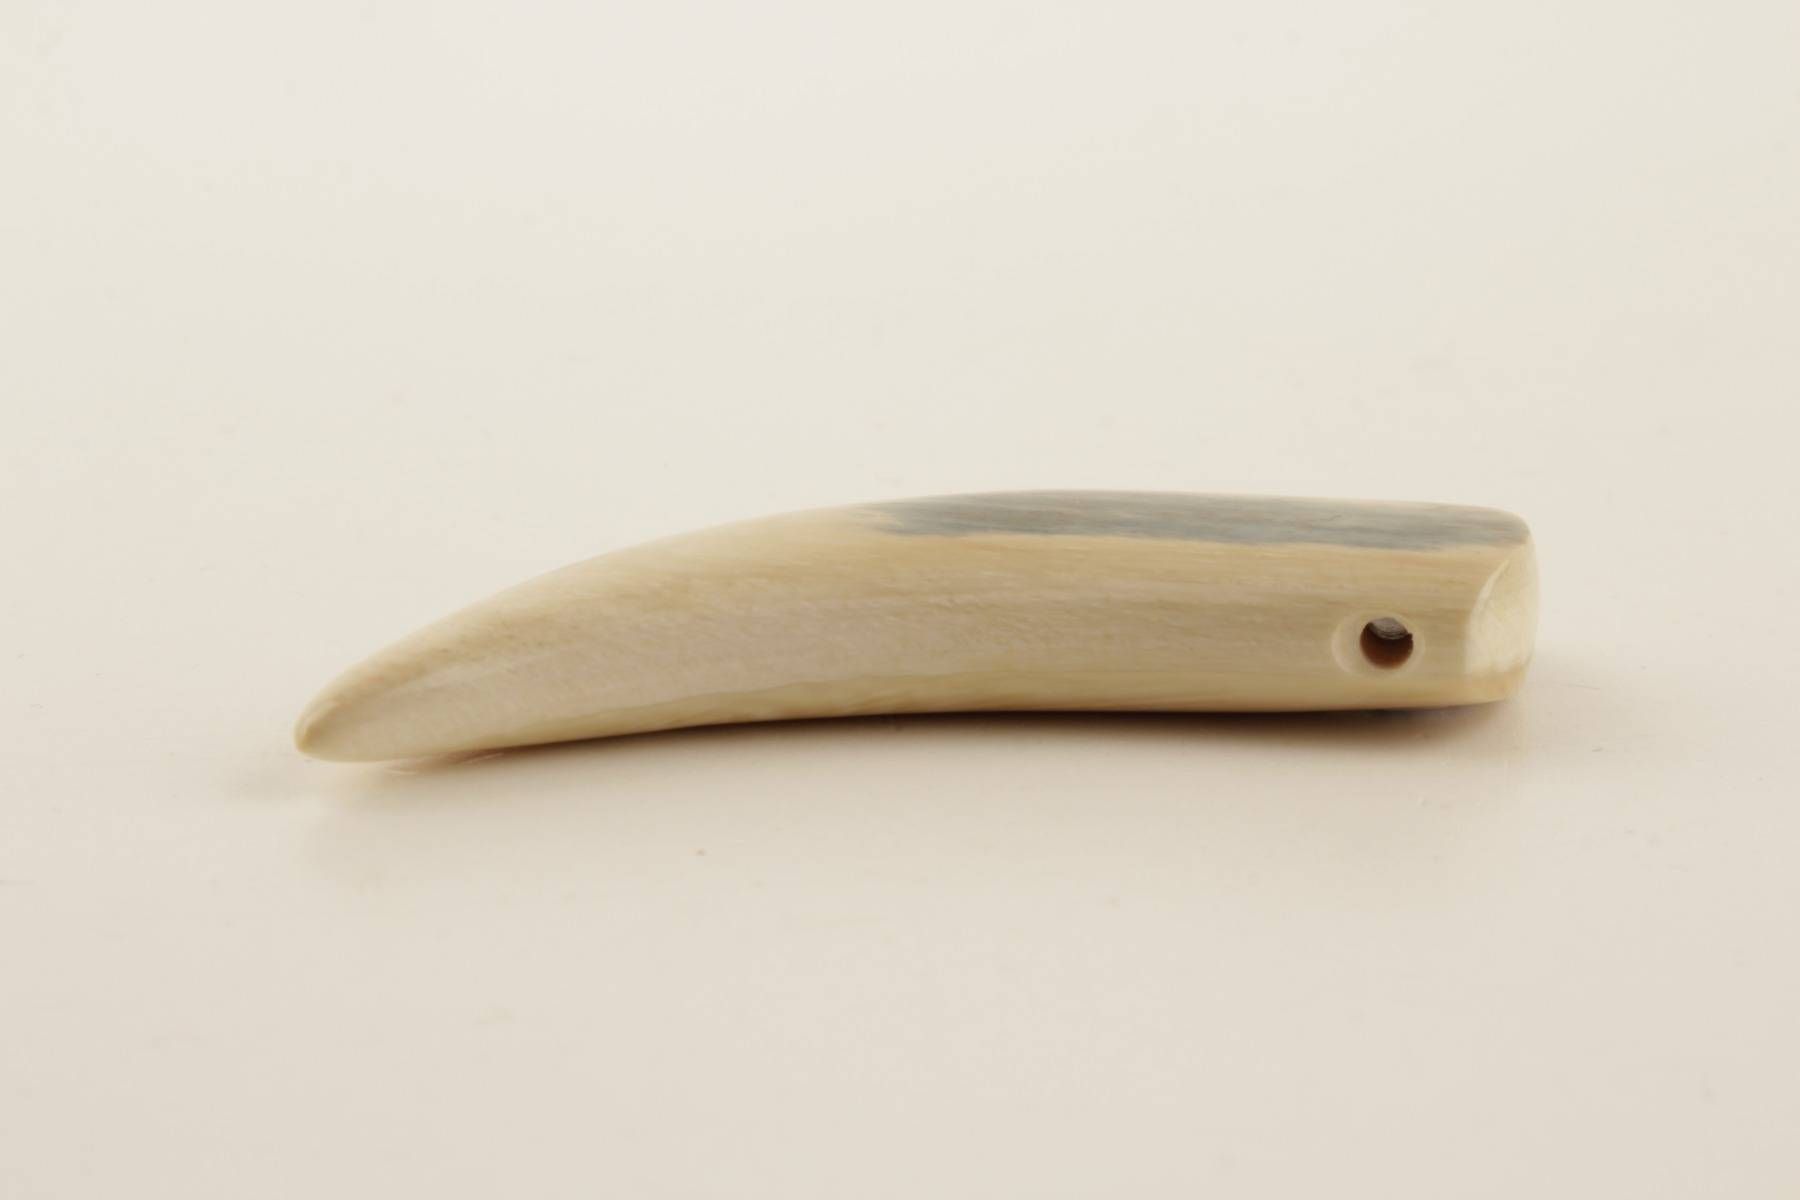 Mammoth ivory pendant